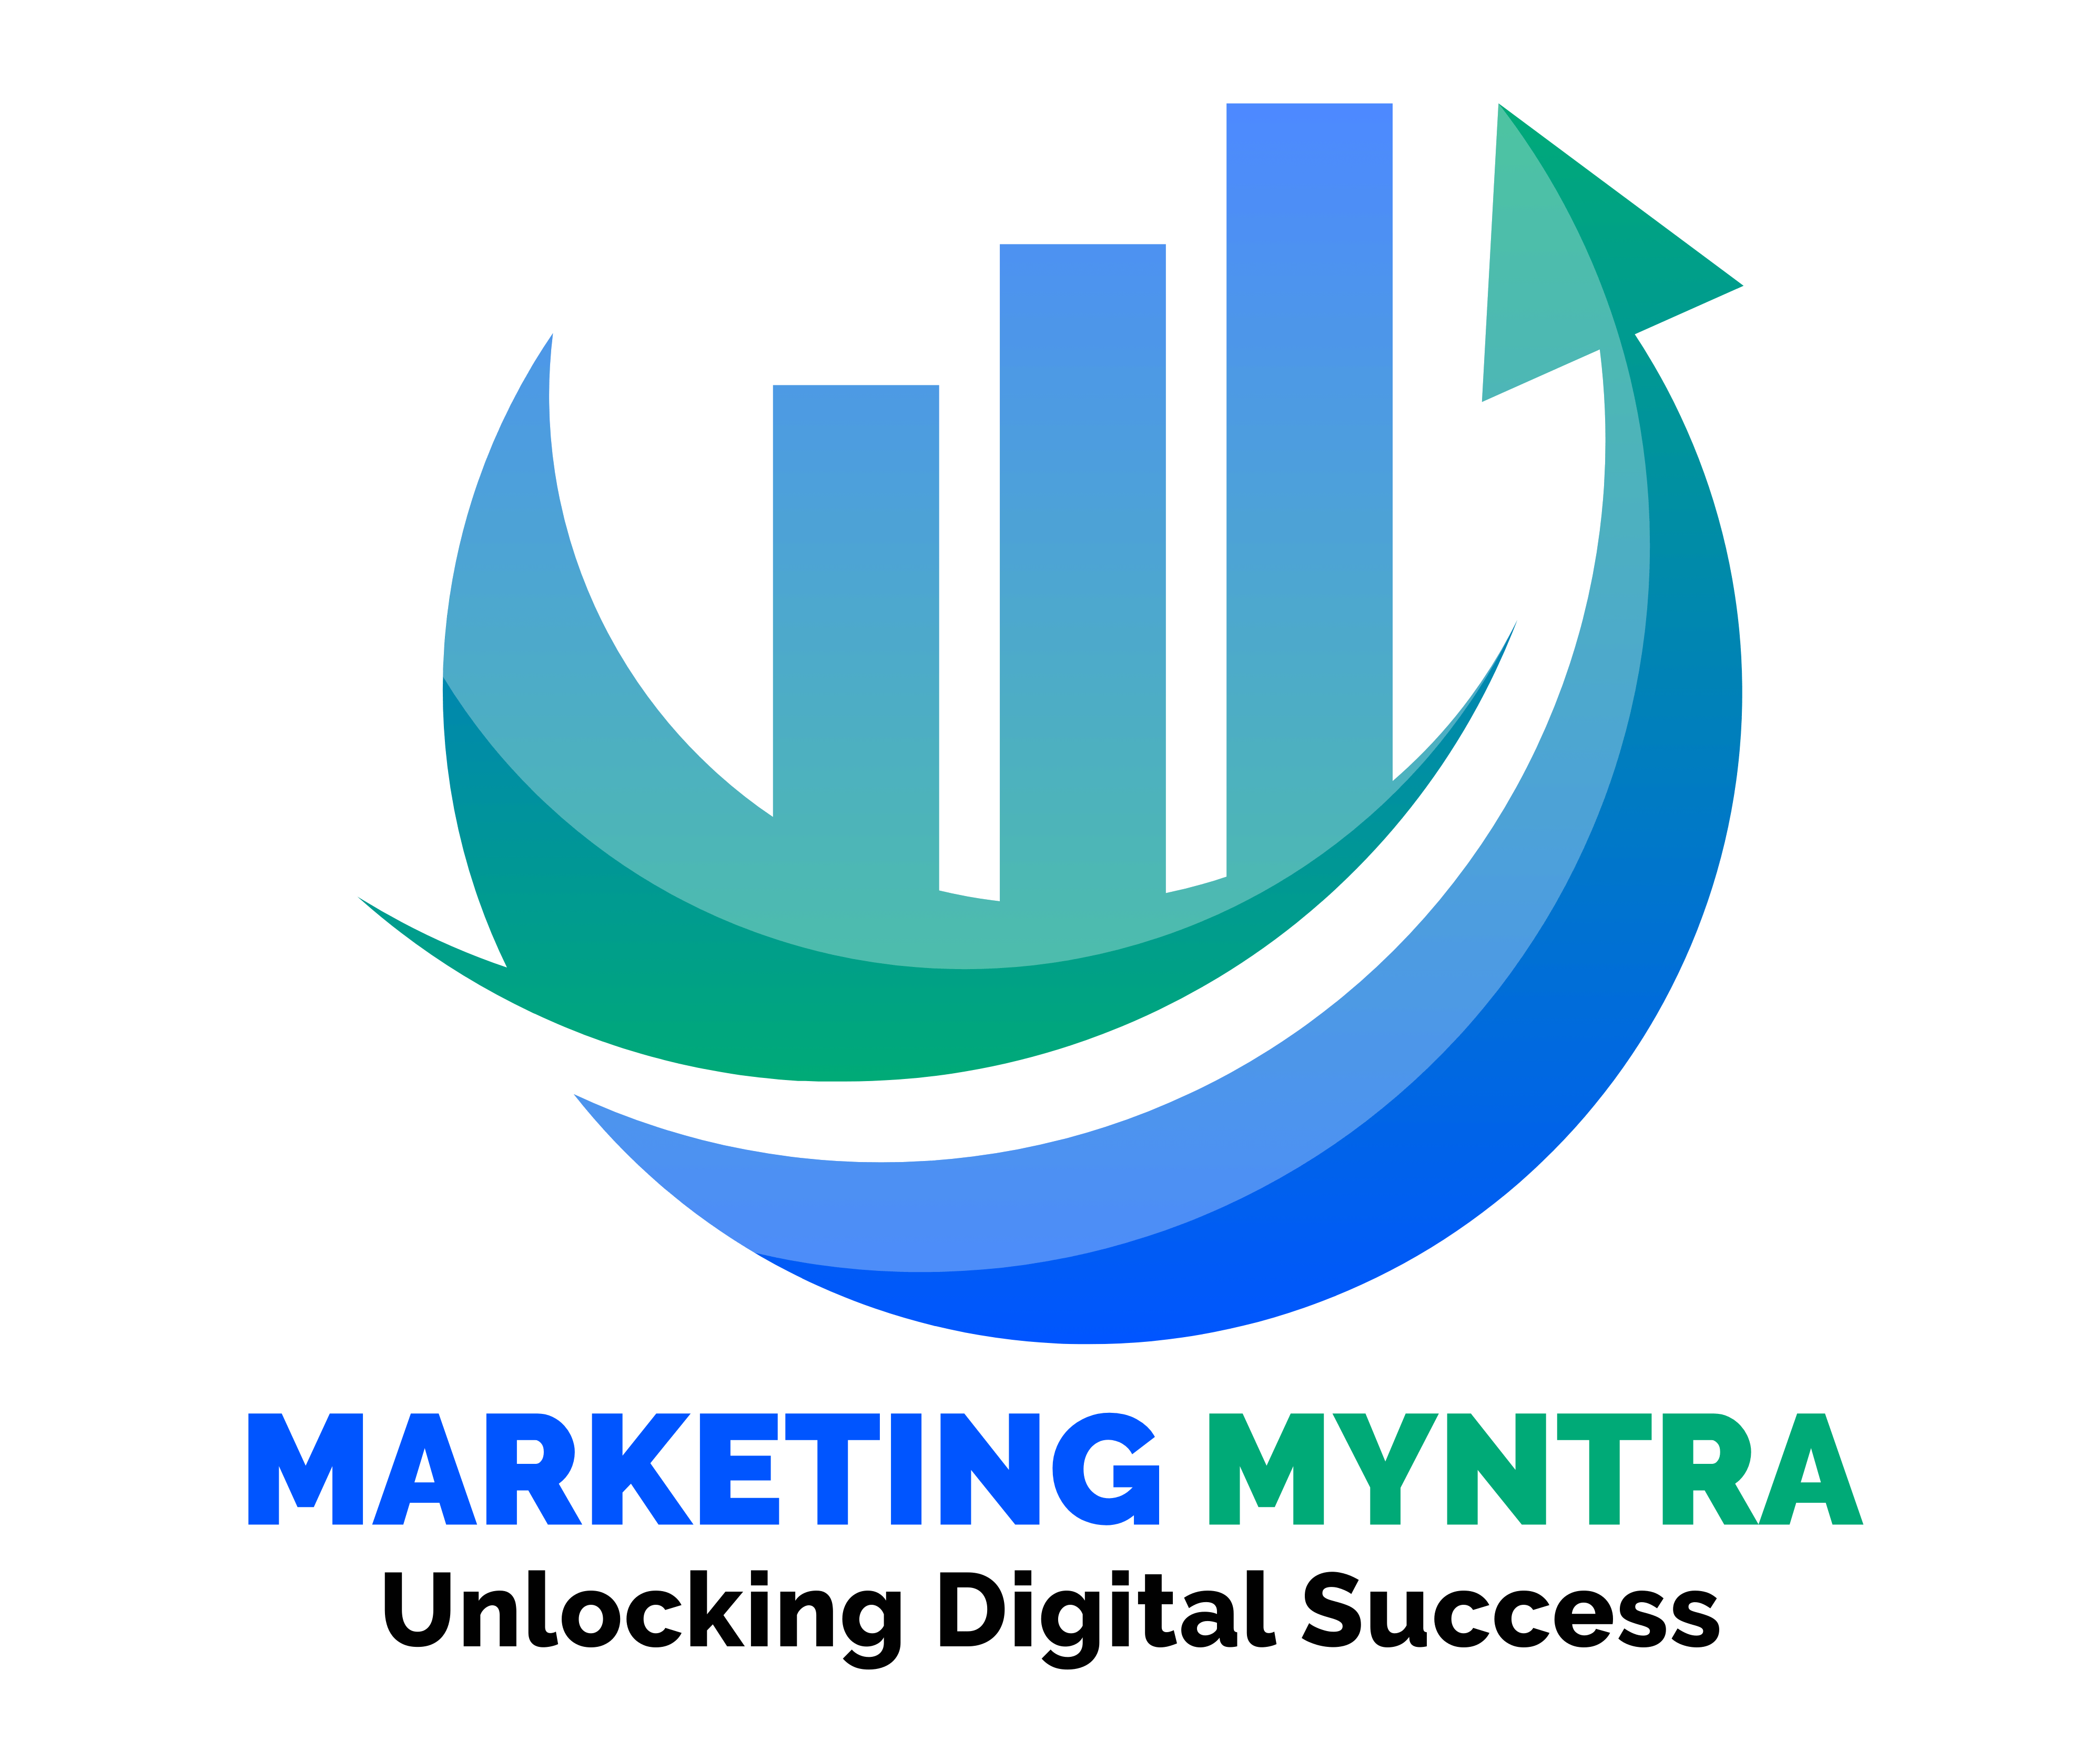 Marketing Myntra Png logo